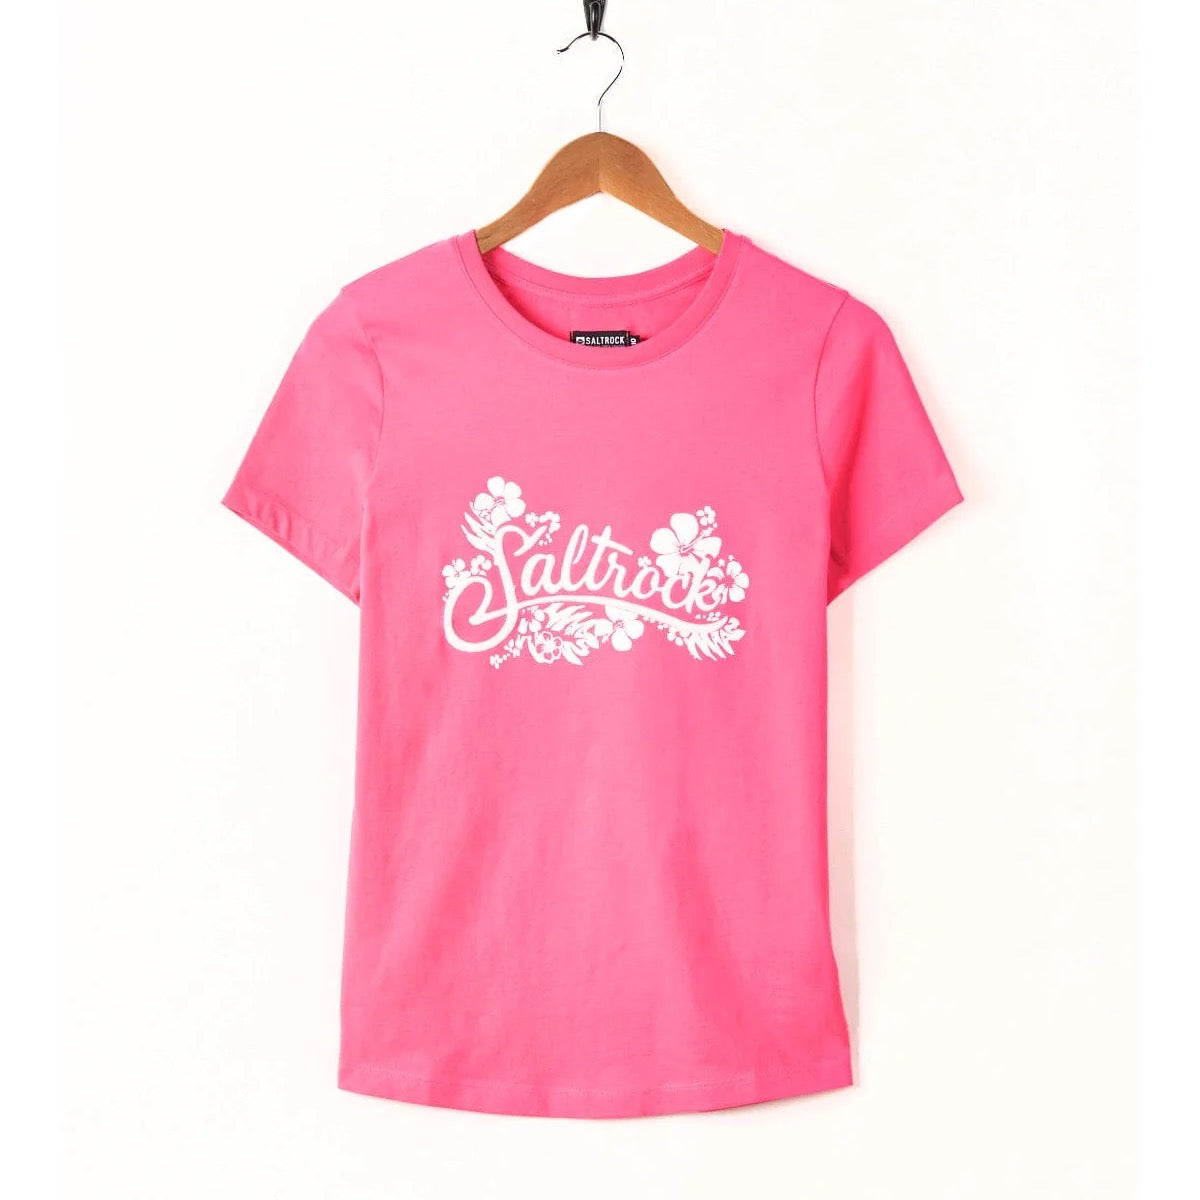 Saltrock Womens Tropic T-Shirt Pink Clothing XS ADULT / Pink,SMALL ADULT / Pink,MEDIUM ADULT / Pink